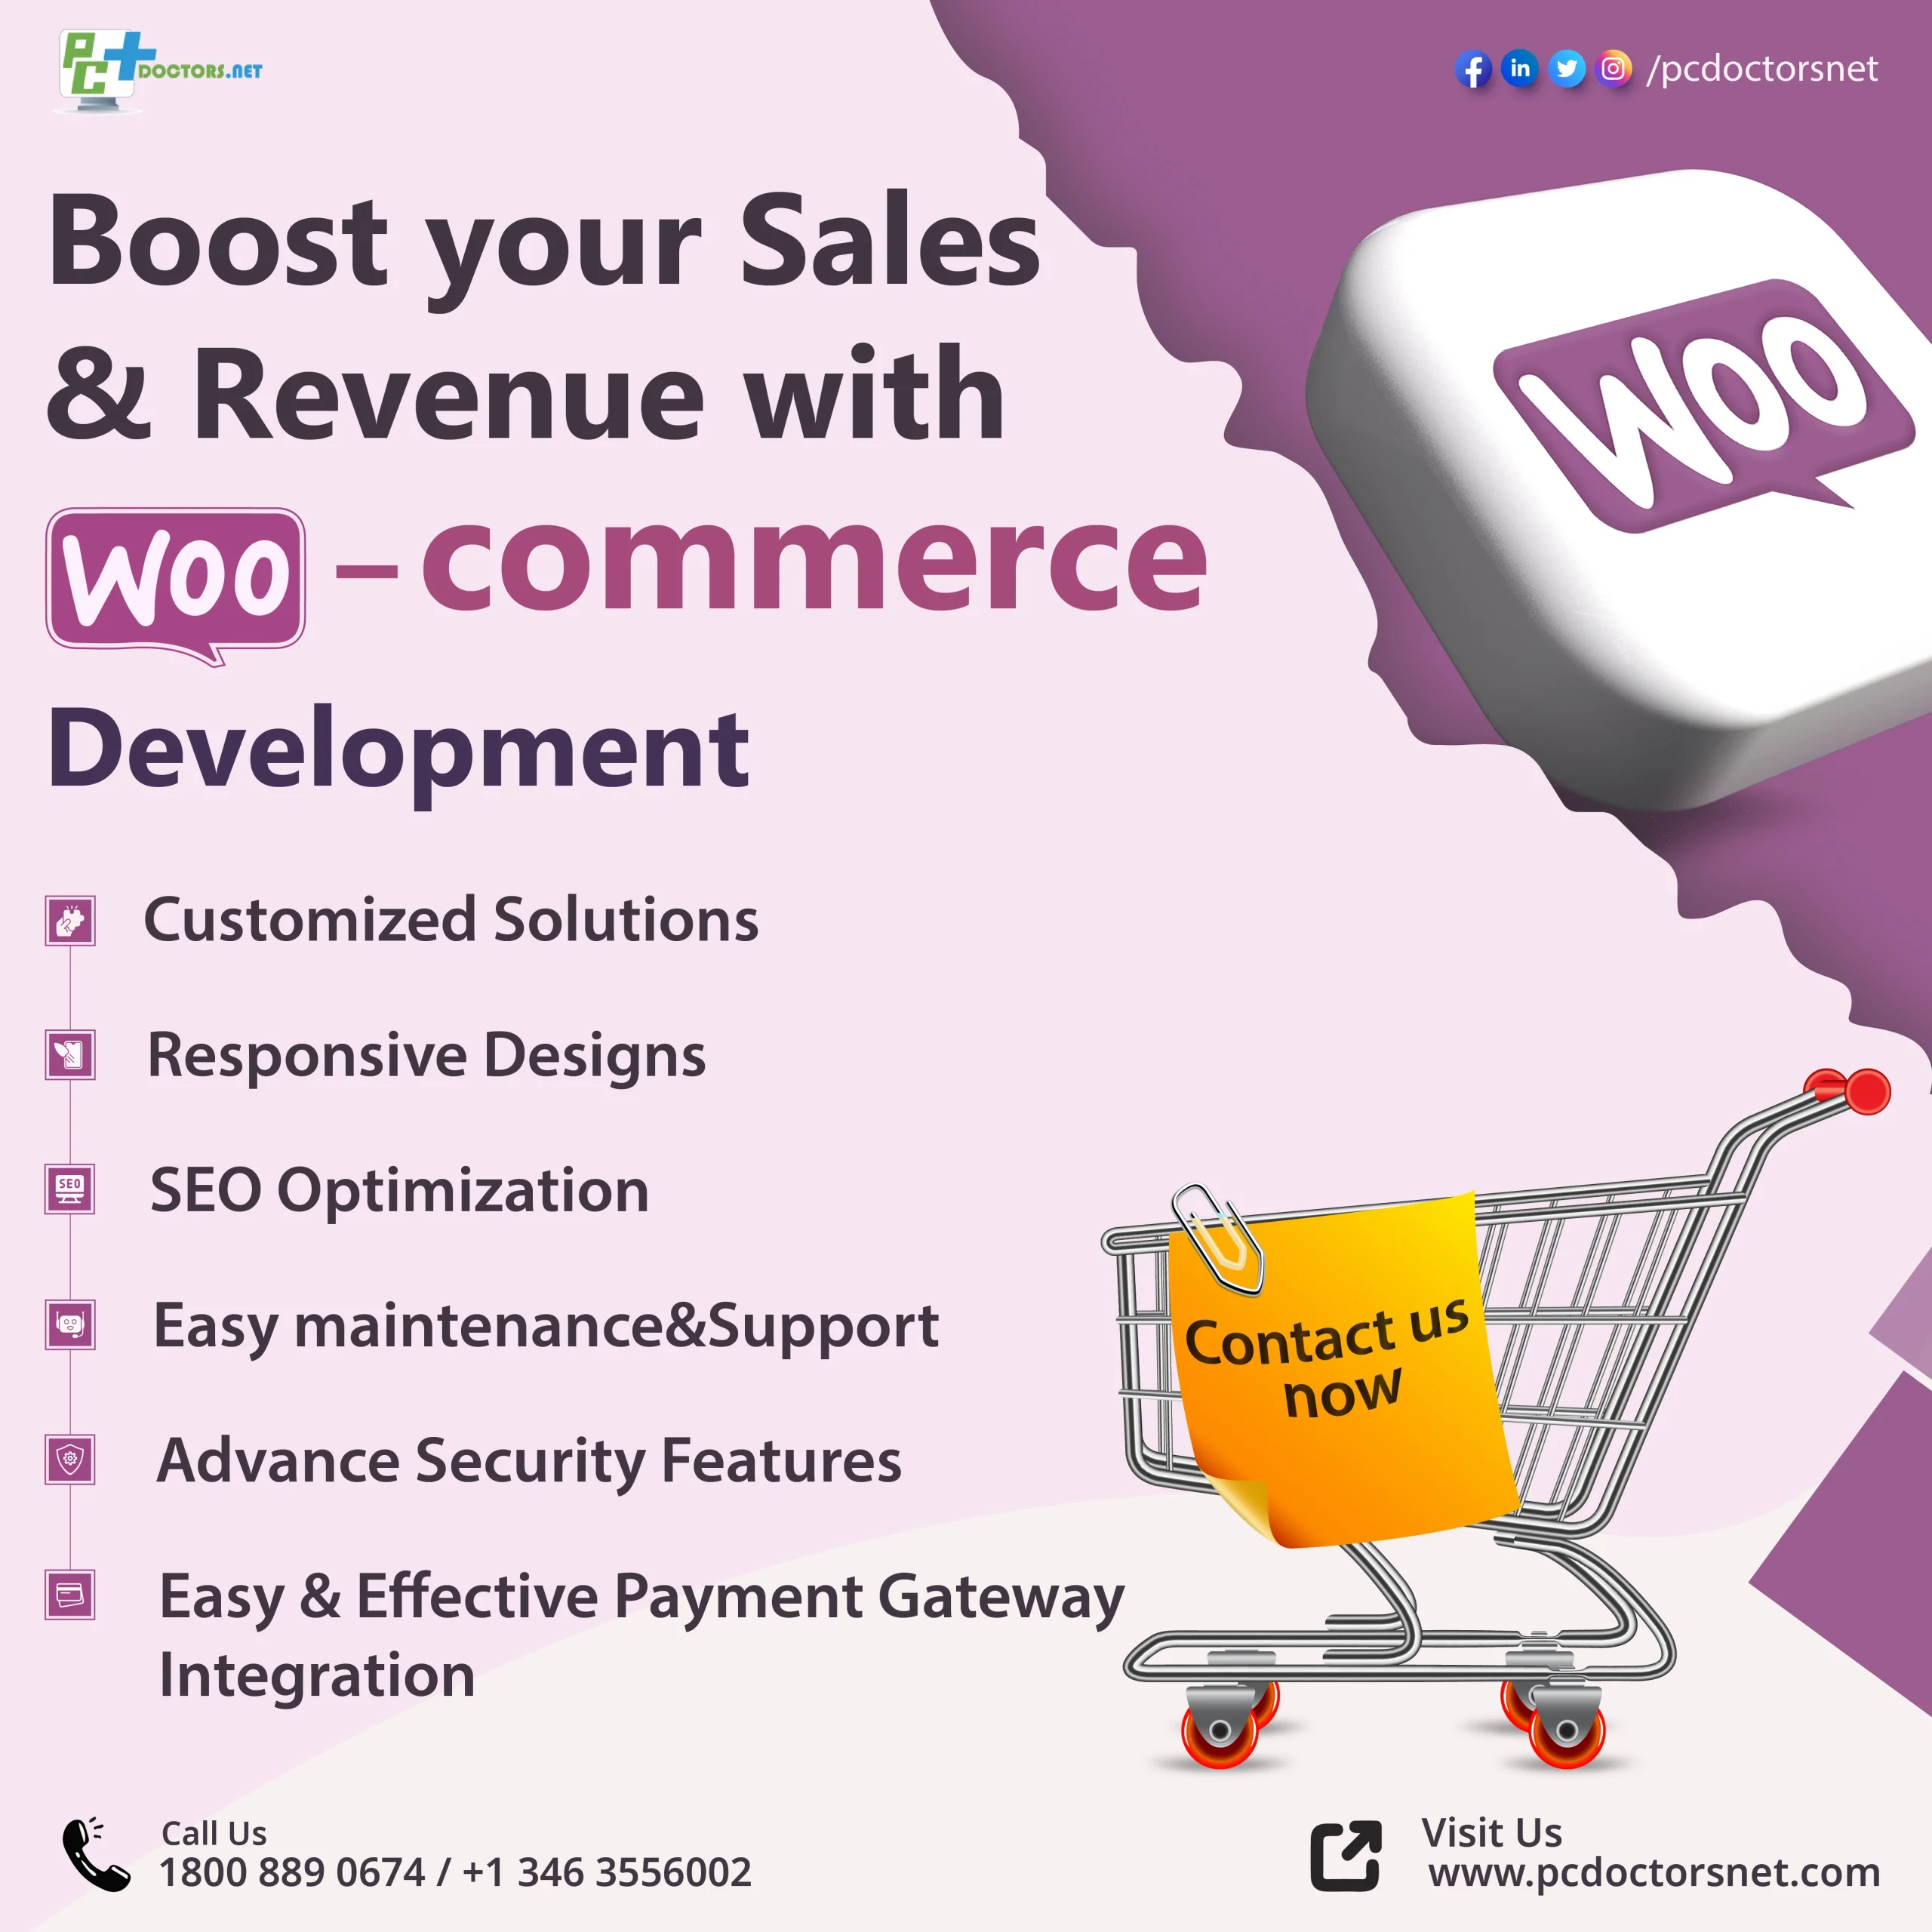 woo commerce development services